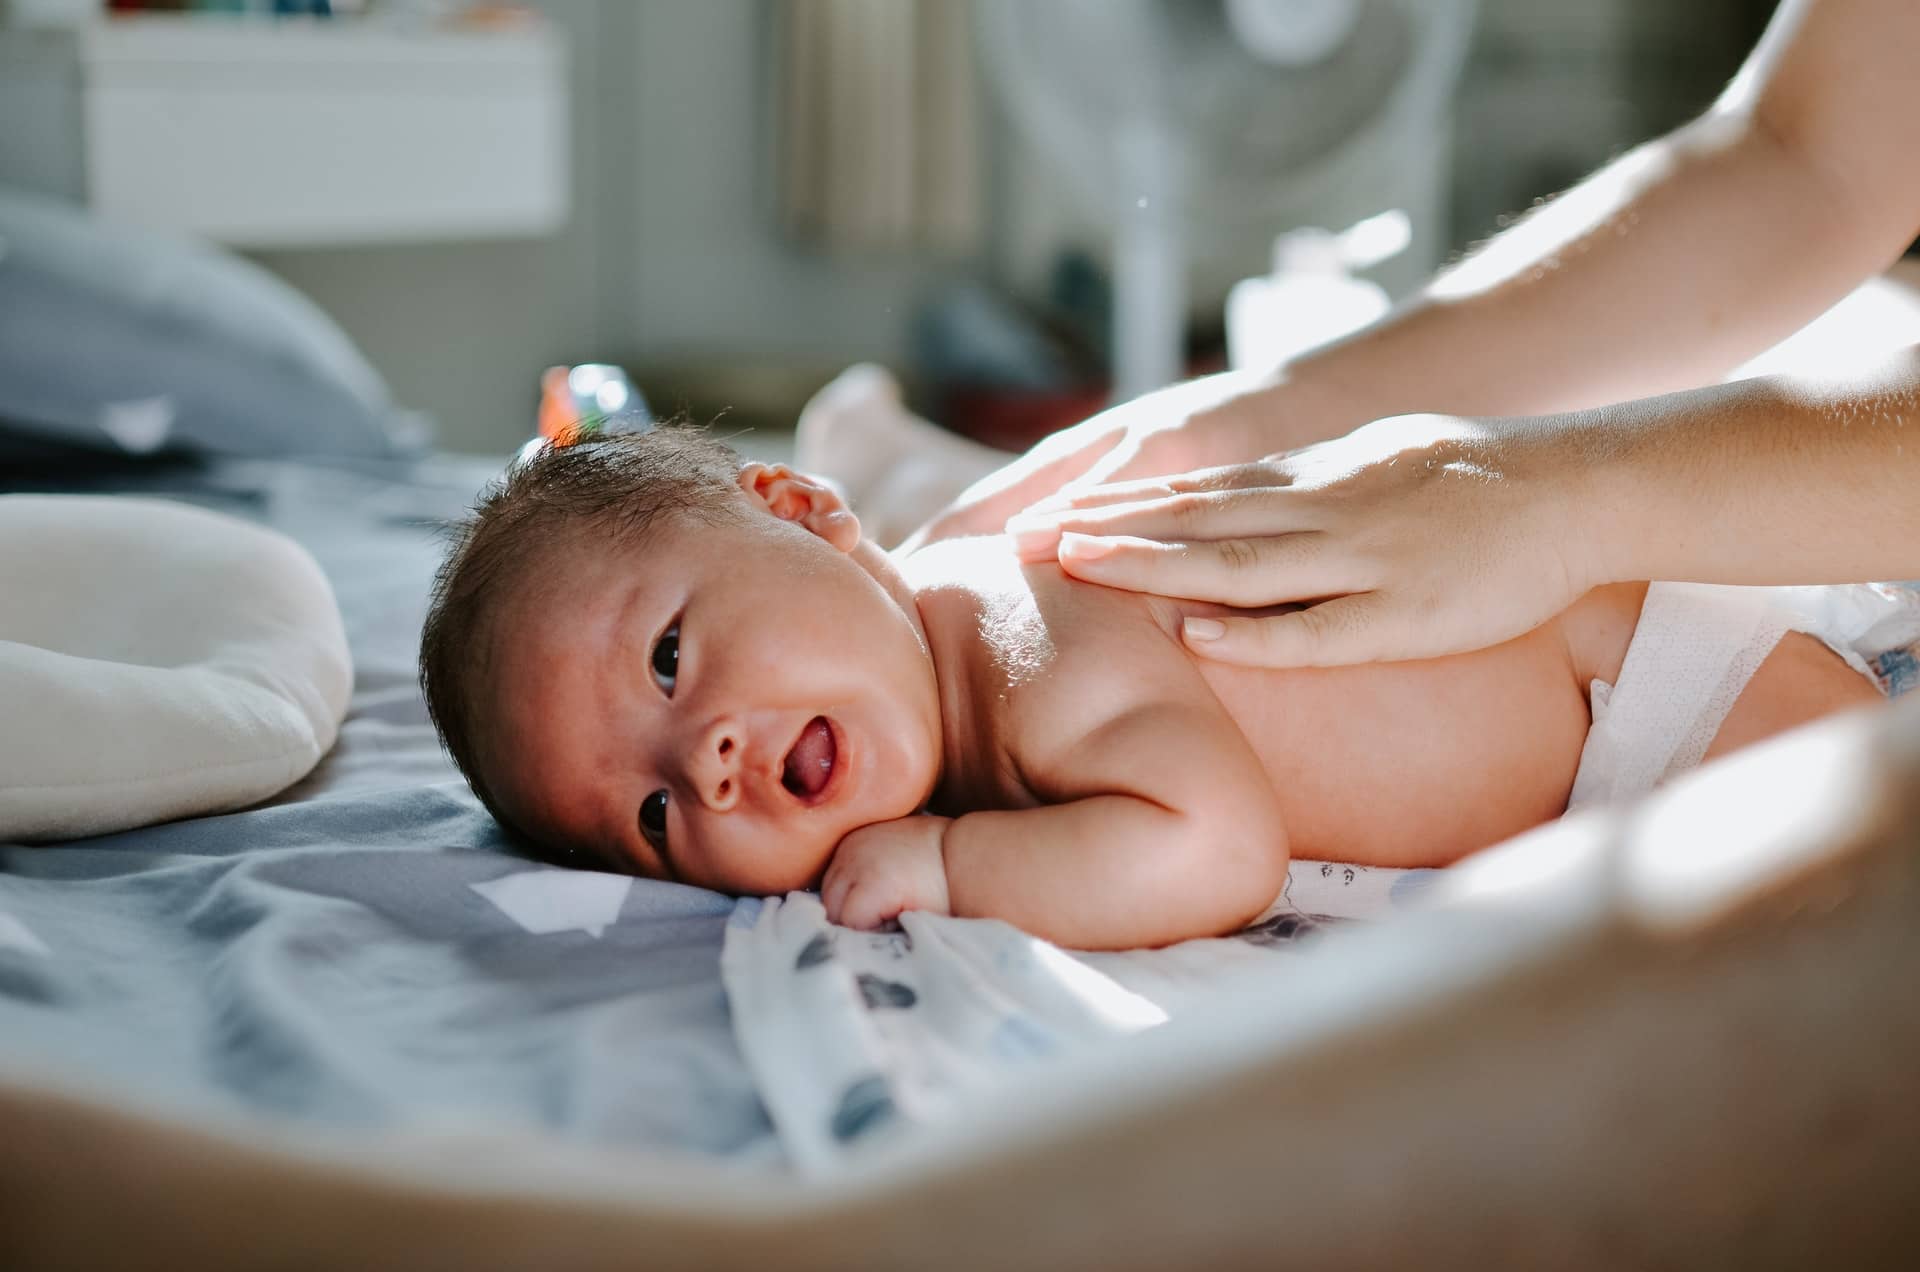 khoa pham 9nC7j1gAS84 unsplash - 101 Baby Care Tips For Every New Mom